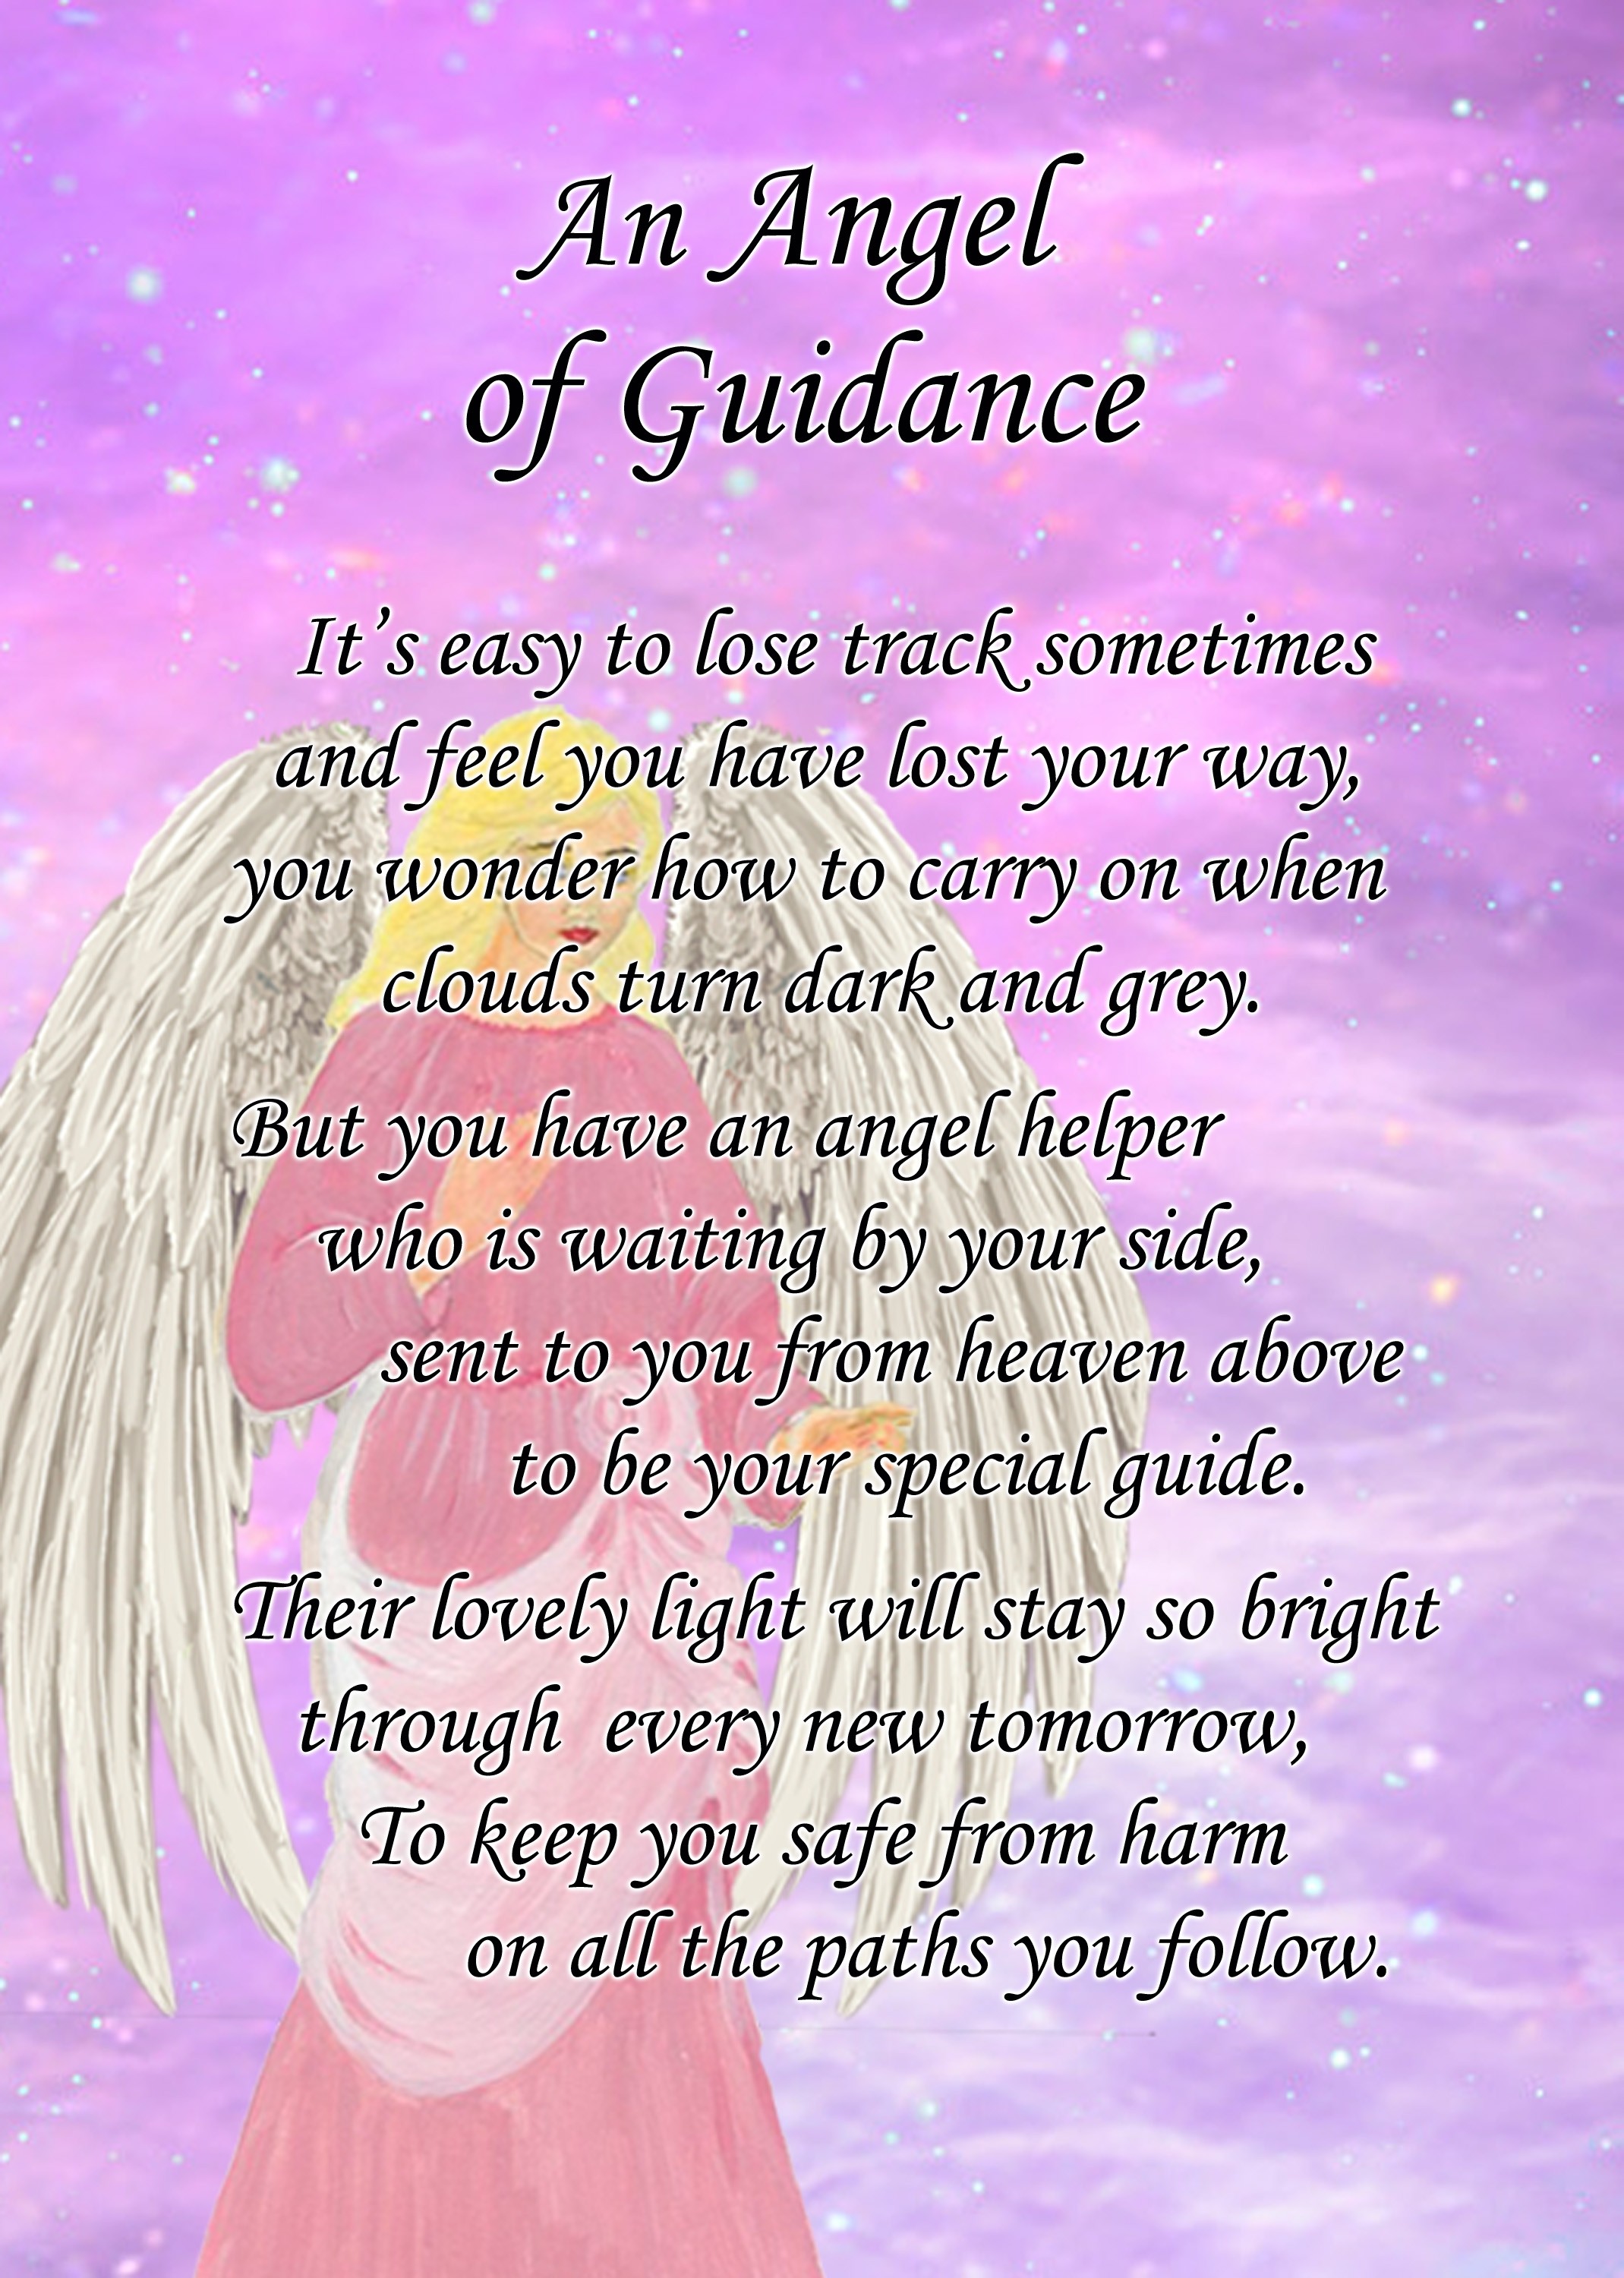 Angel of Guidance Poem Verse Greeting Card